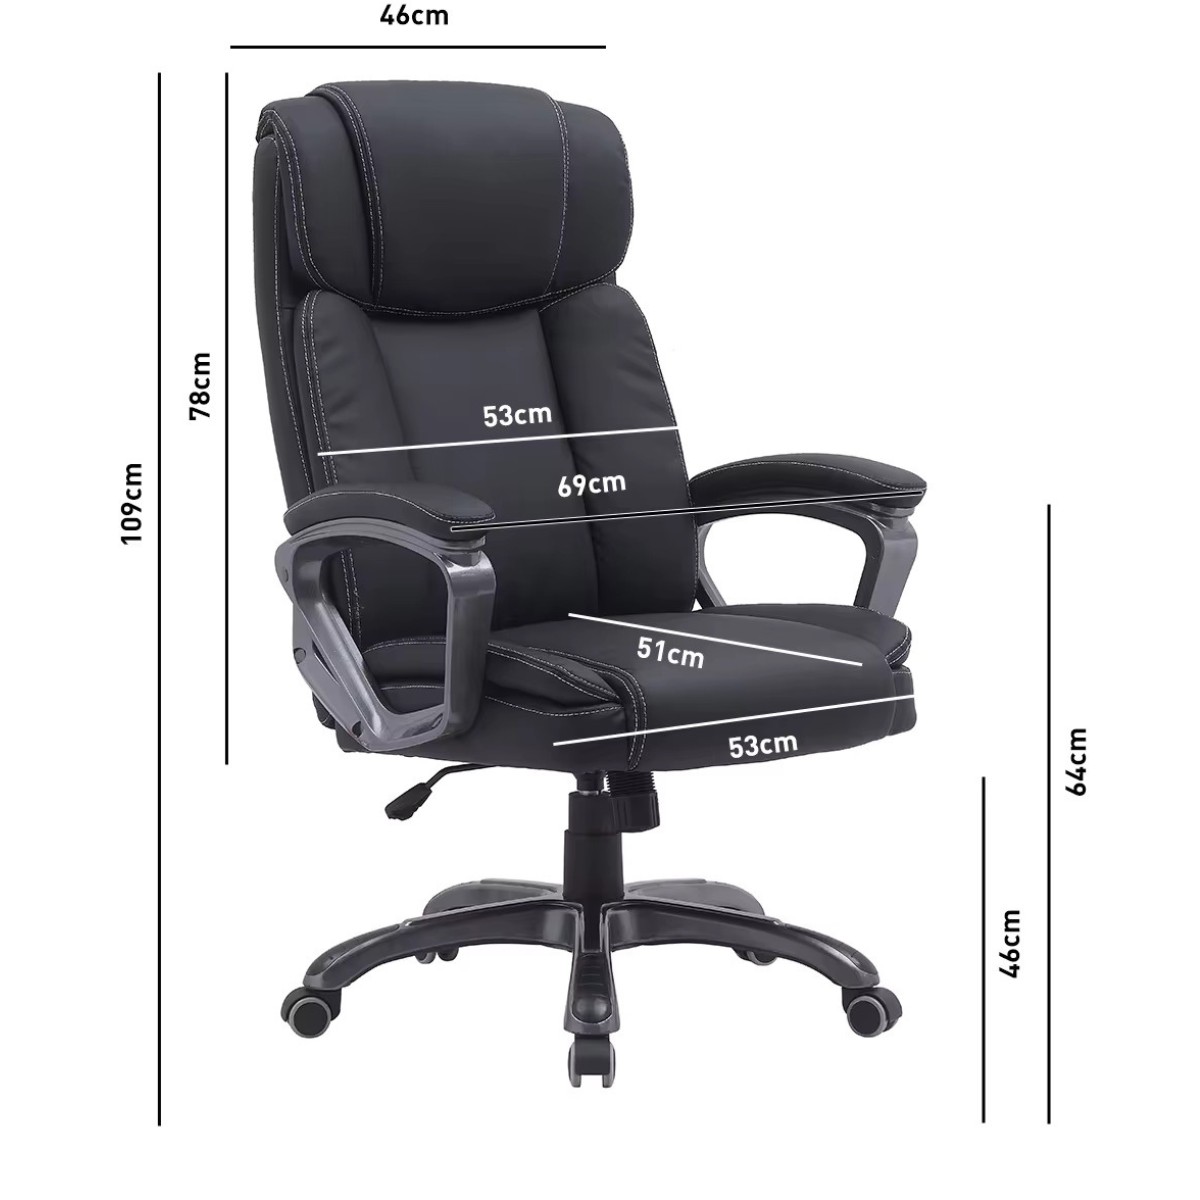 Davern Black Office Chair - 5